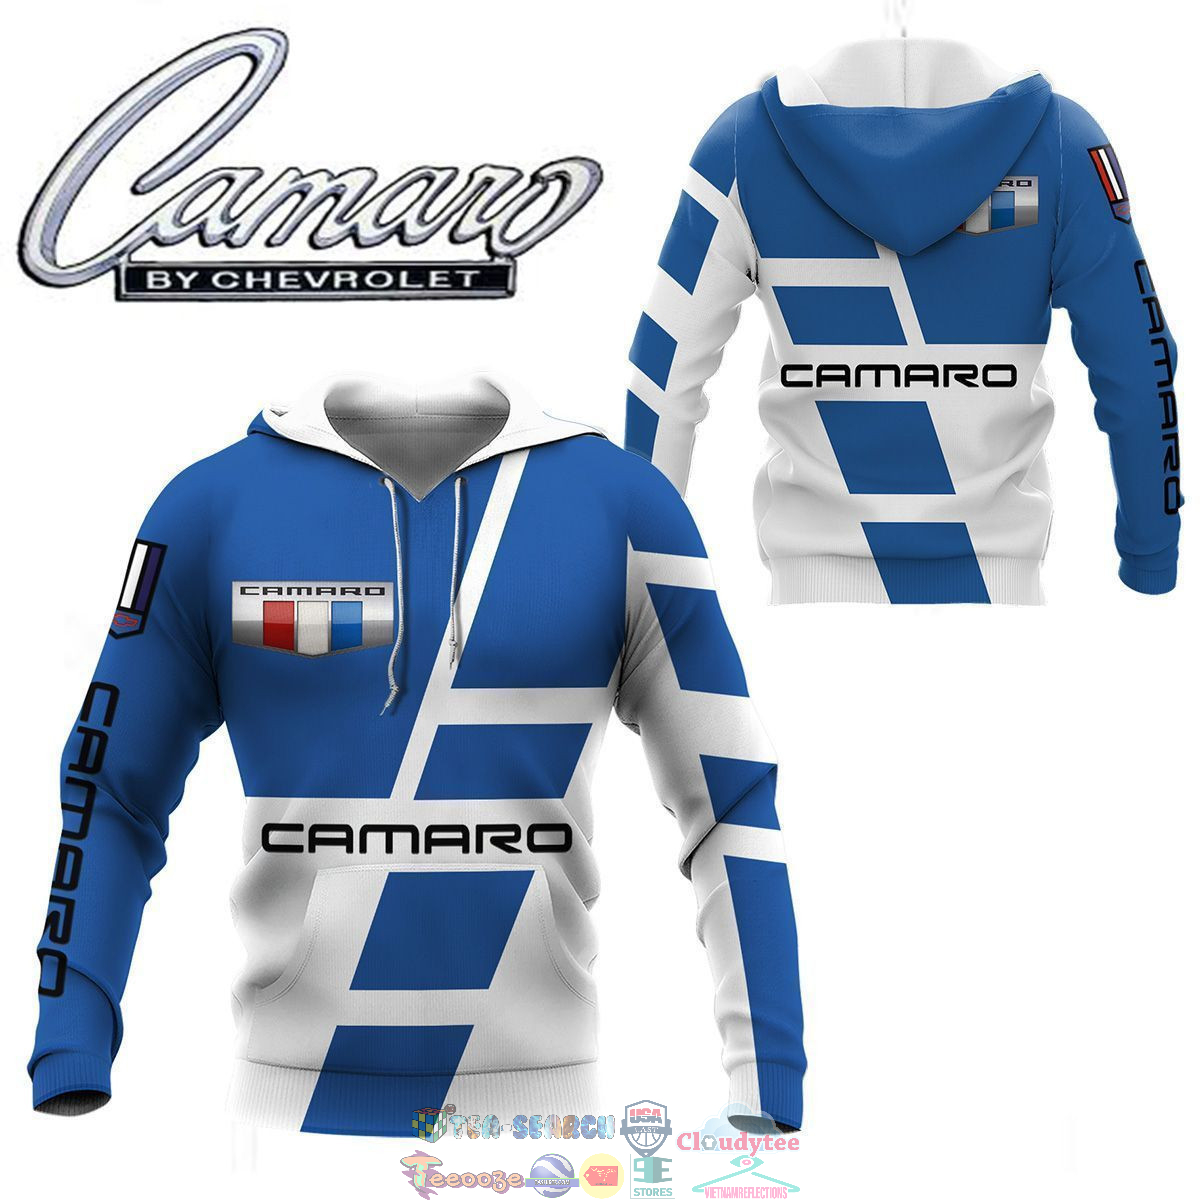 Chevrolet Camaro ver 19 3D hoodie and t-shirt – Saleoff